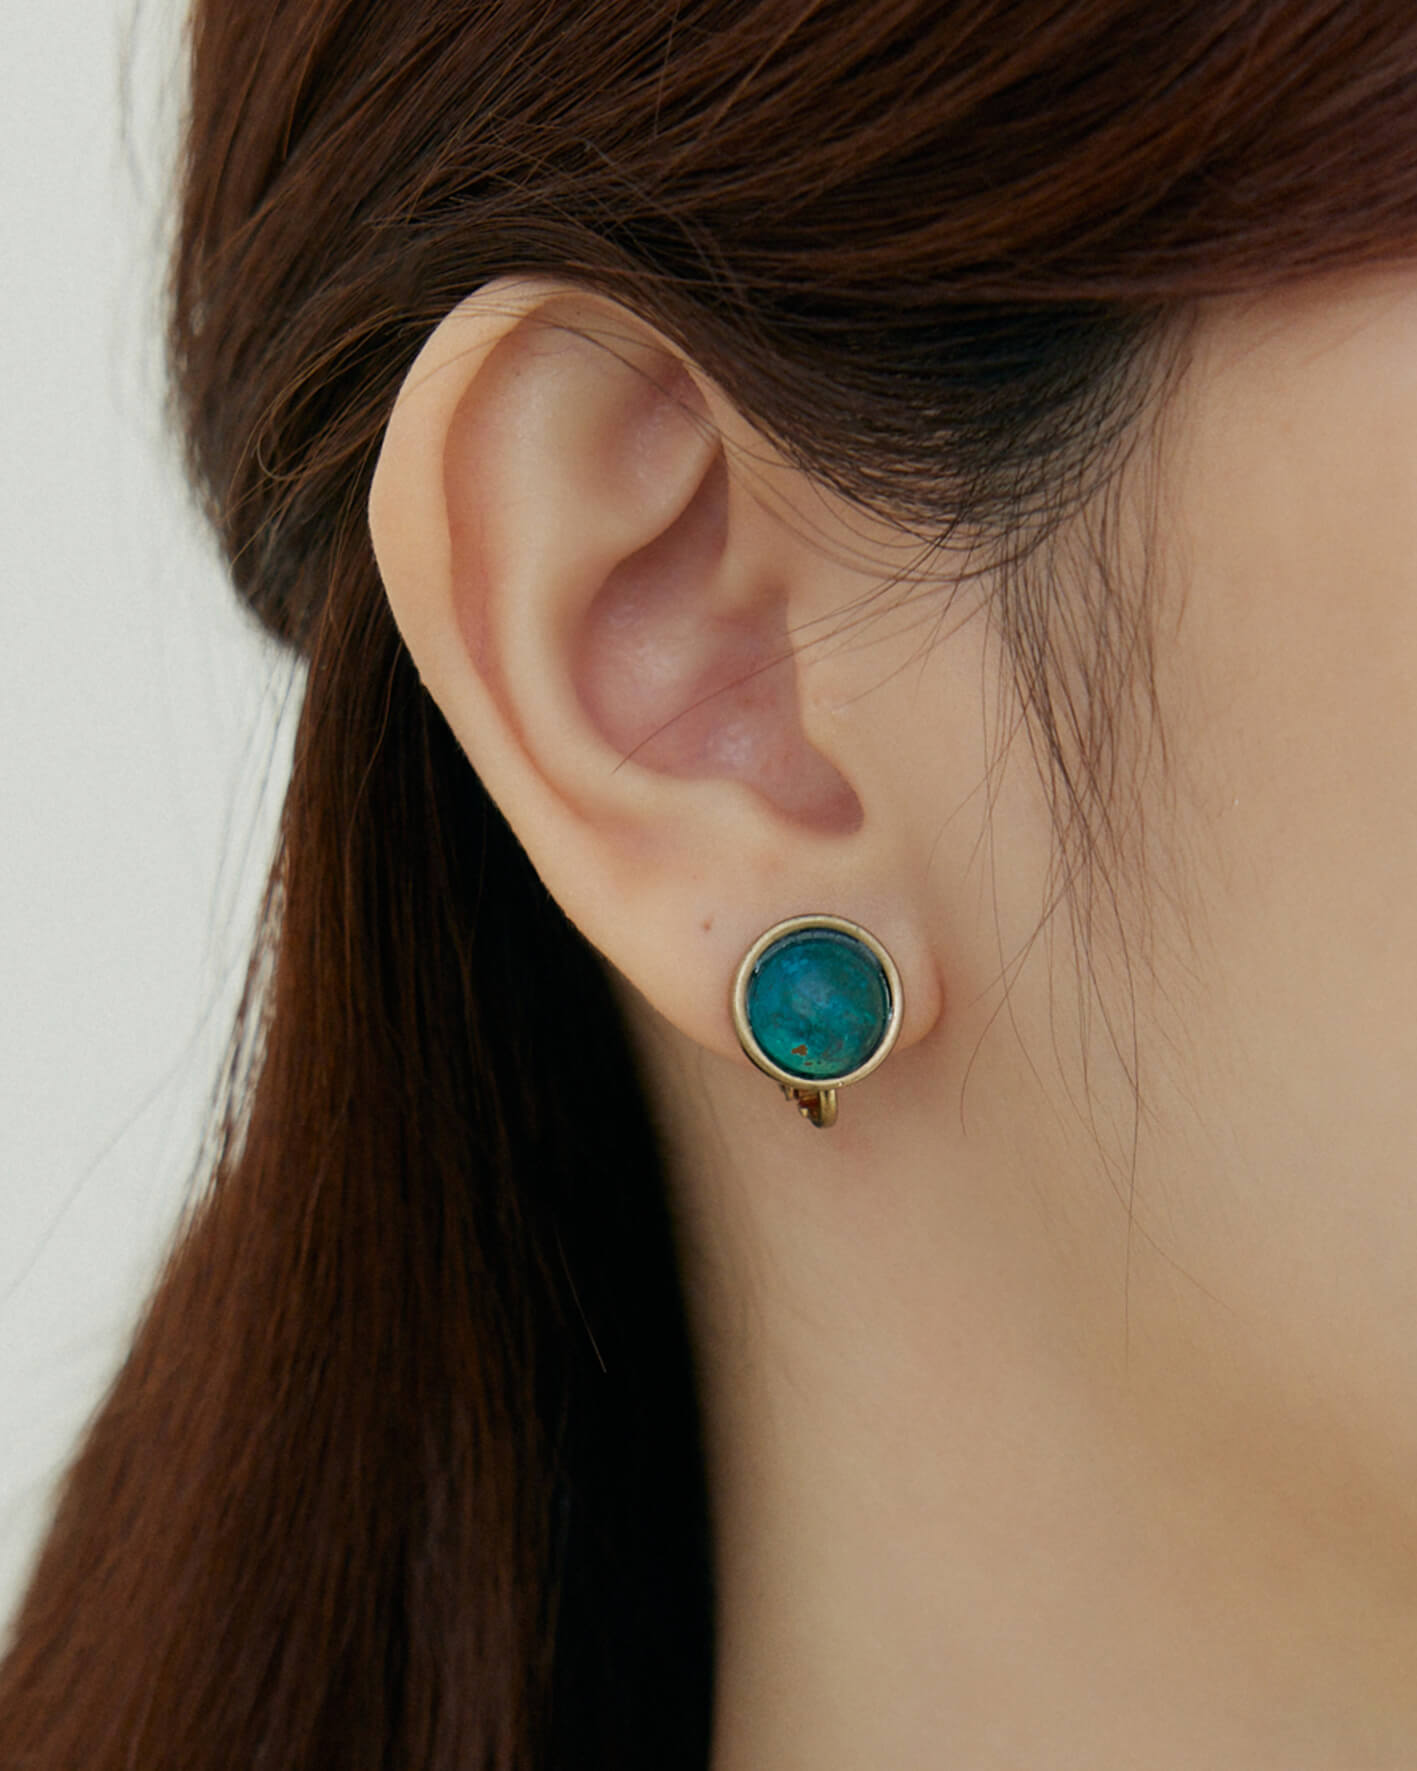 Eco安珂,韓國飾品,韓國耳環,韓國耳骨夾,垂墜耳環,螺旋夾耳環,可調式耳夾耳環,螺旋夾垂墜耳環